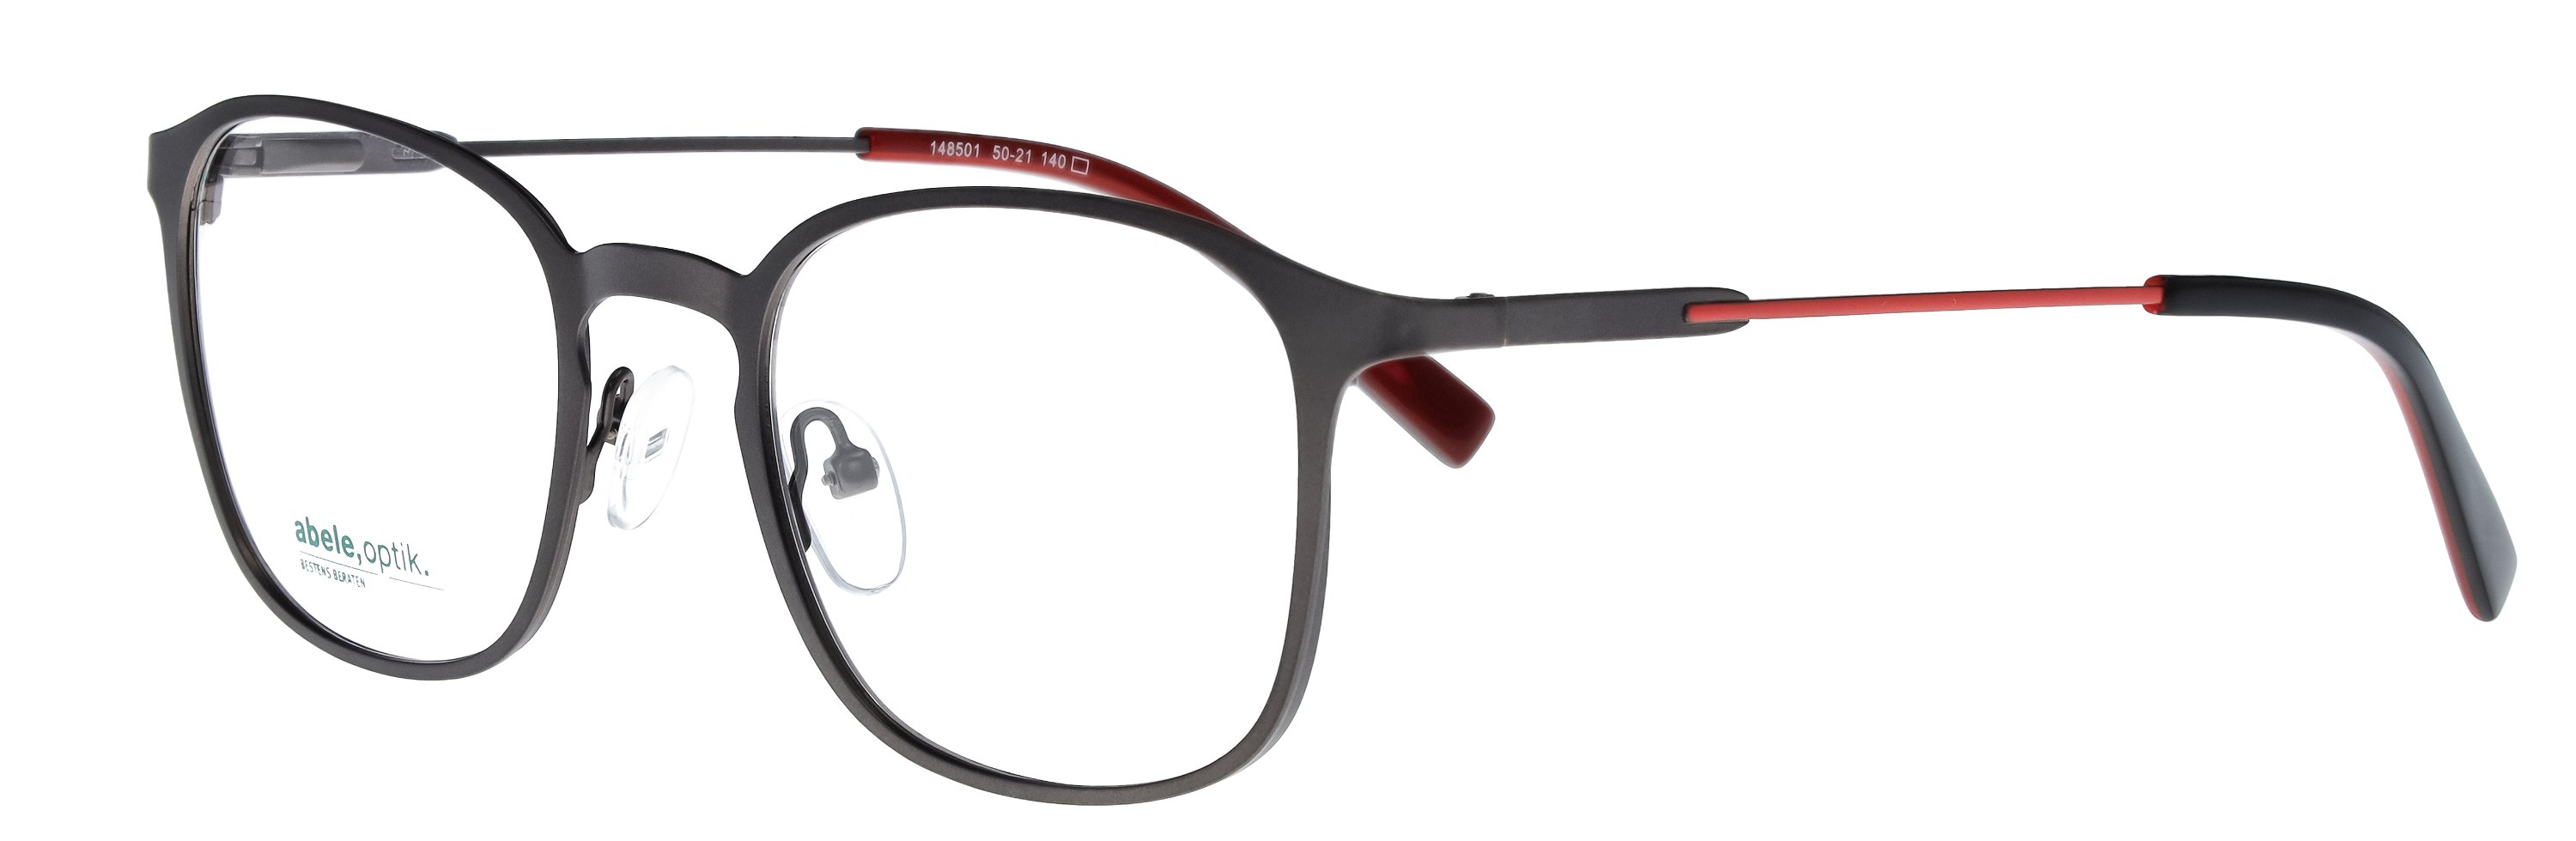 abele optik Brille für Herren in grau matt 148501